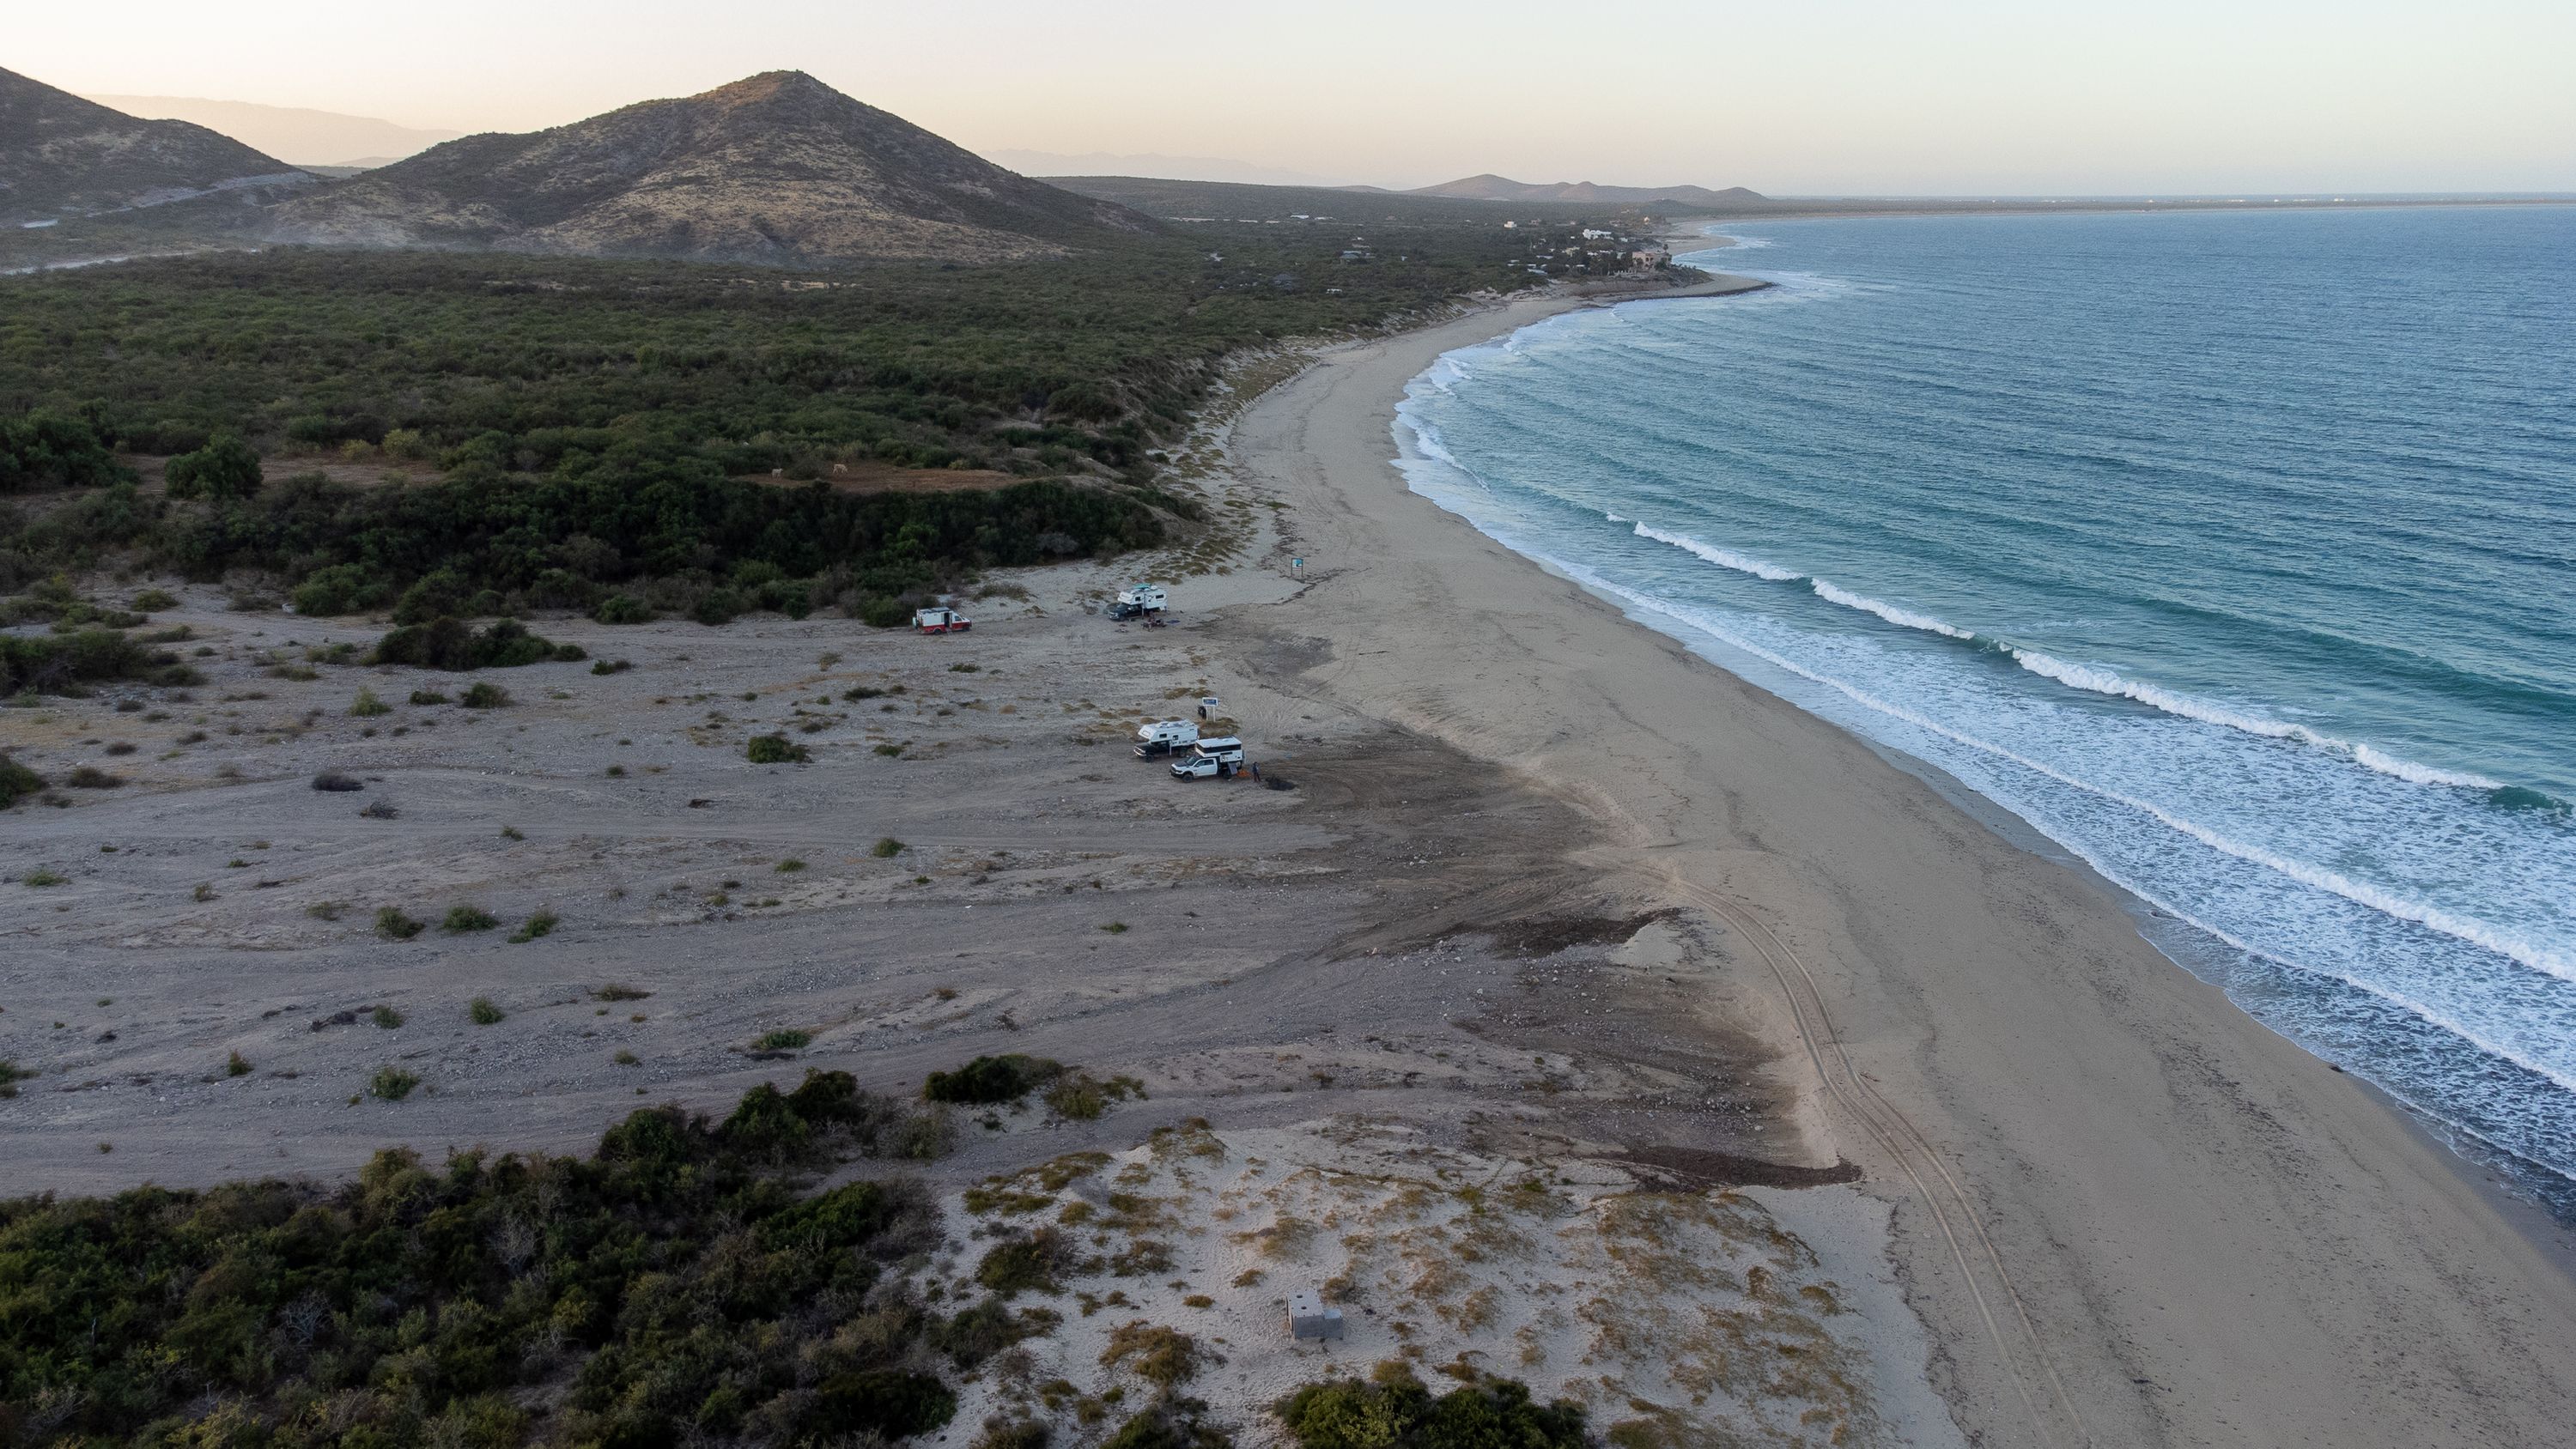 Our quaint camp spot on Playa Miramar, North of Cabo Pulmo